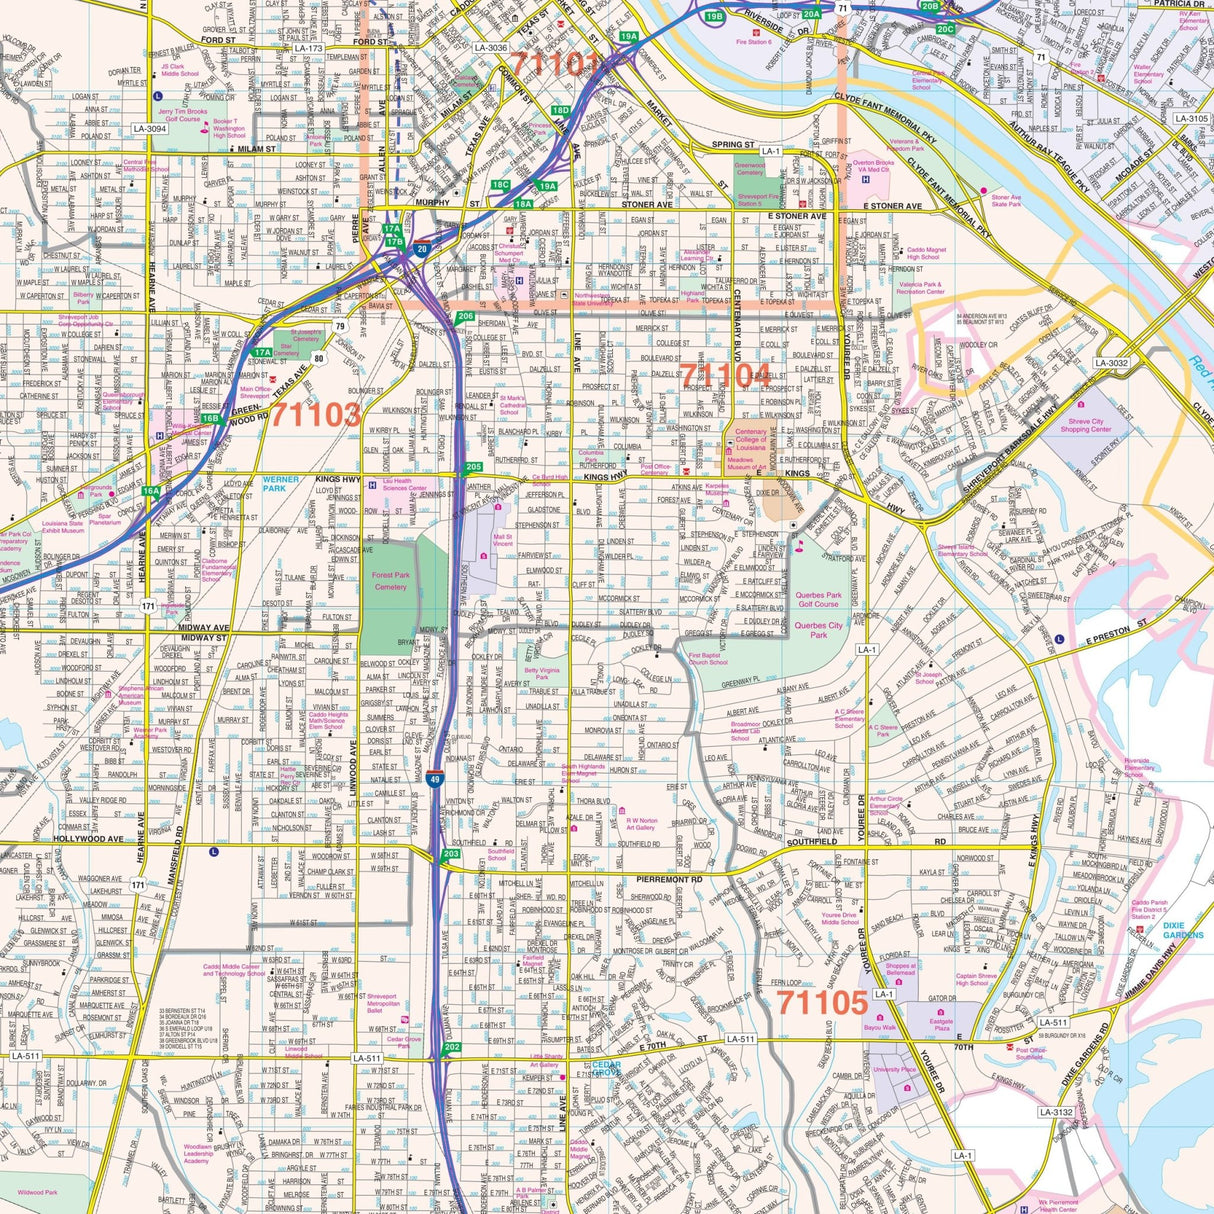 Shreveport & Bossier City, LA Wall Map - KA-C-LA-SHREVEPORT-PAPER - Ultimate Globes